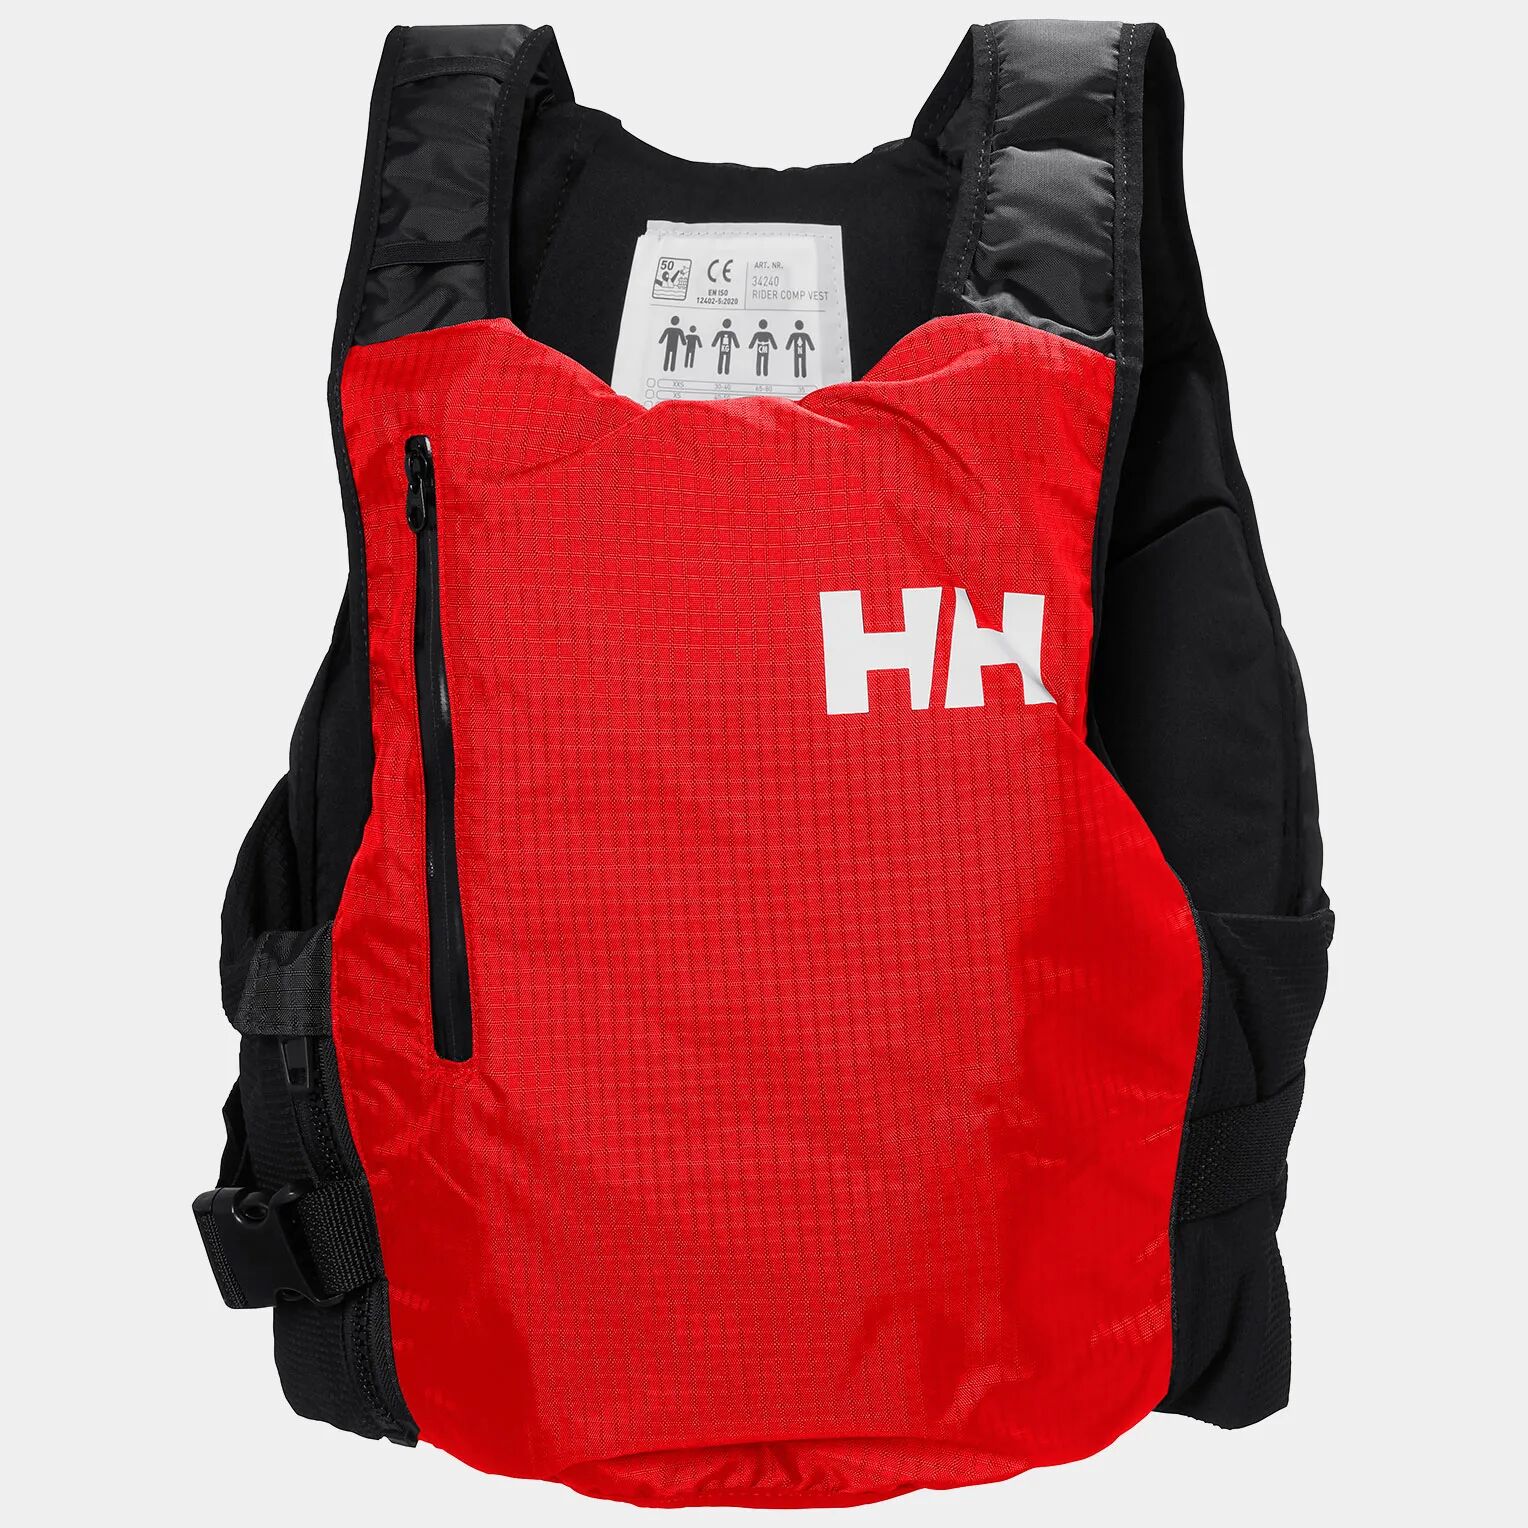 Helly Hansen Rider Foil Race Life Jacket Red 40/50KG - Alert Red - Unisex